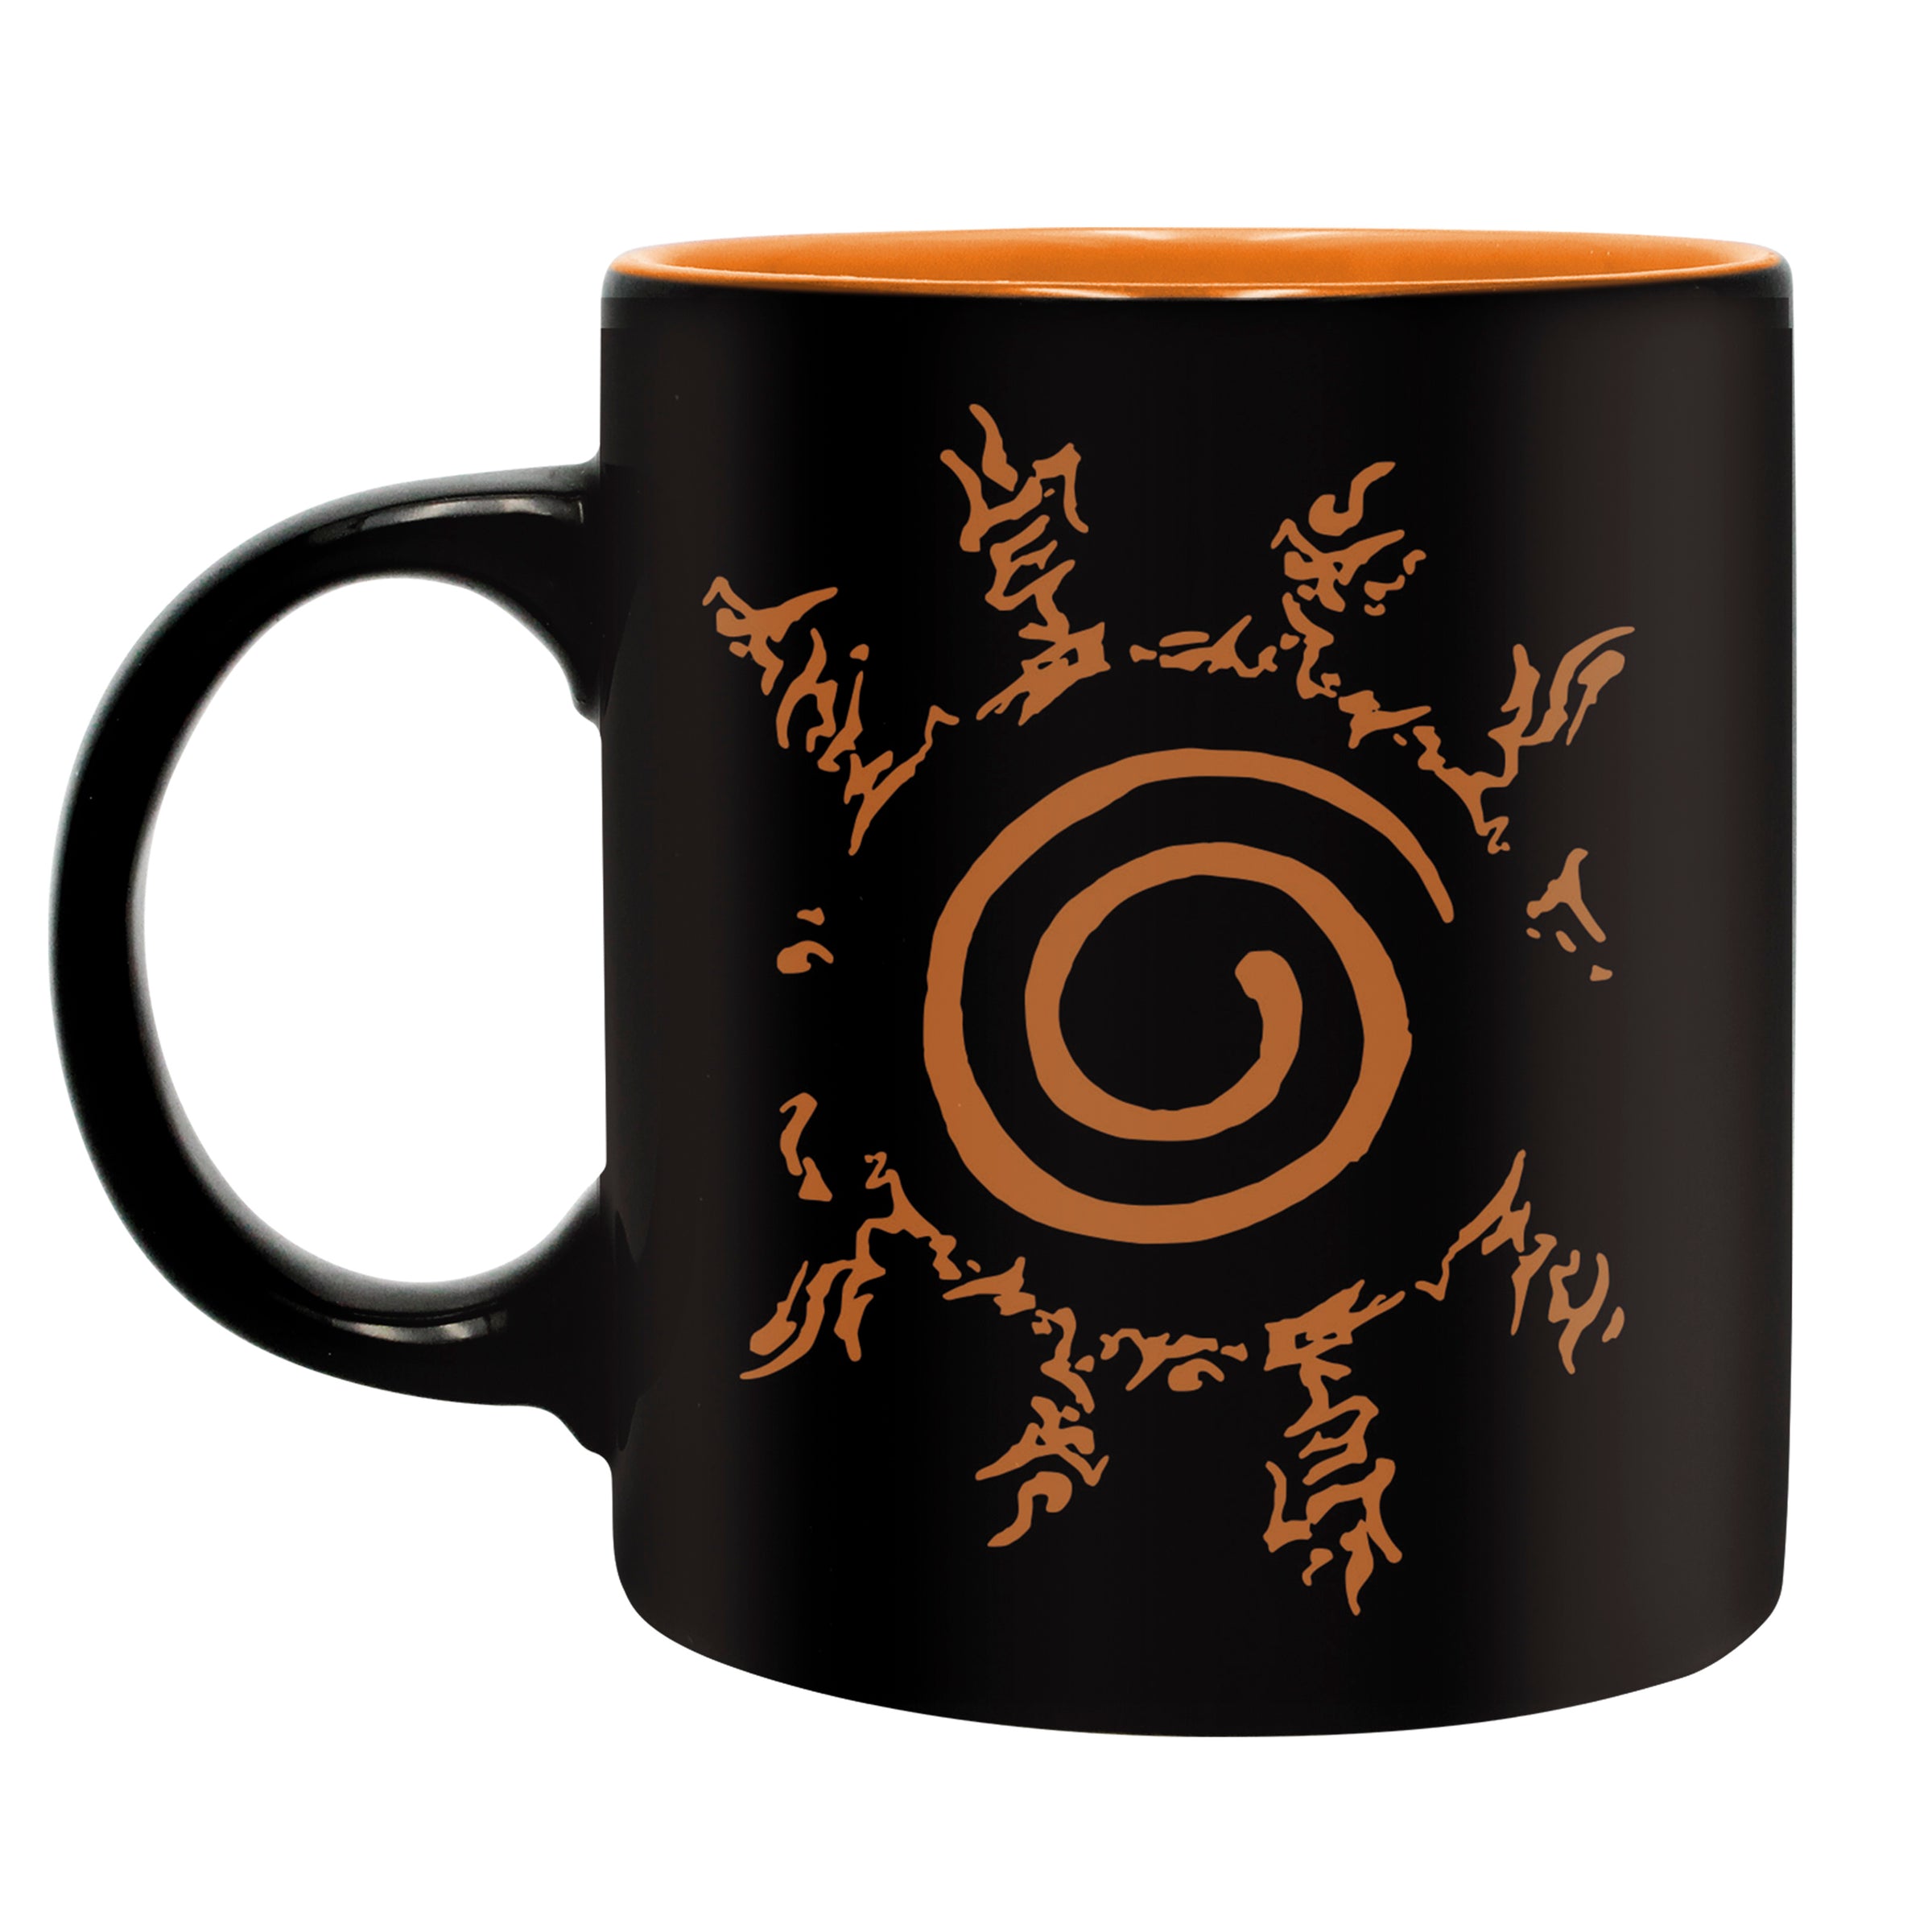 Coffee's Gold Standard of the Naruto Fandom